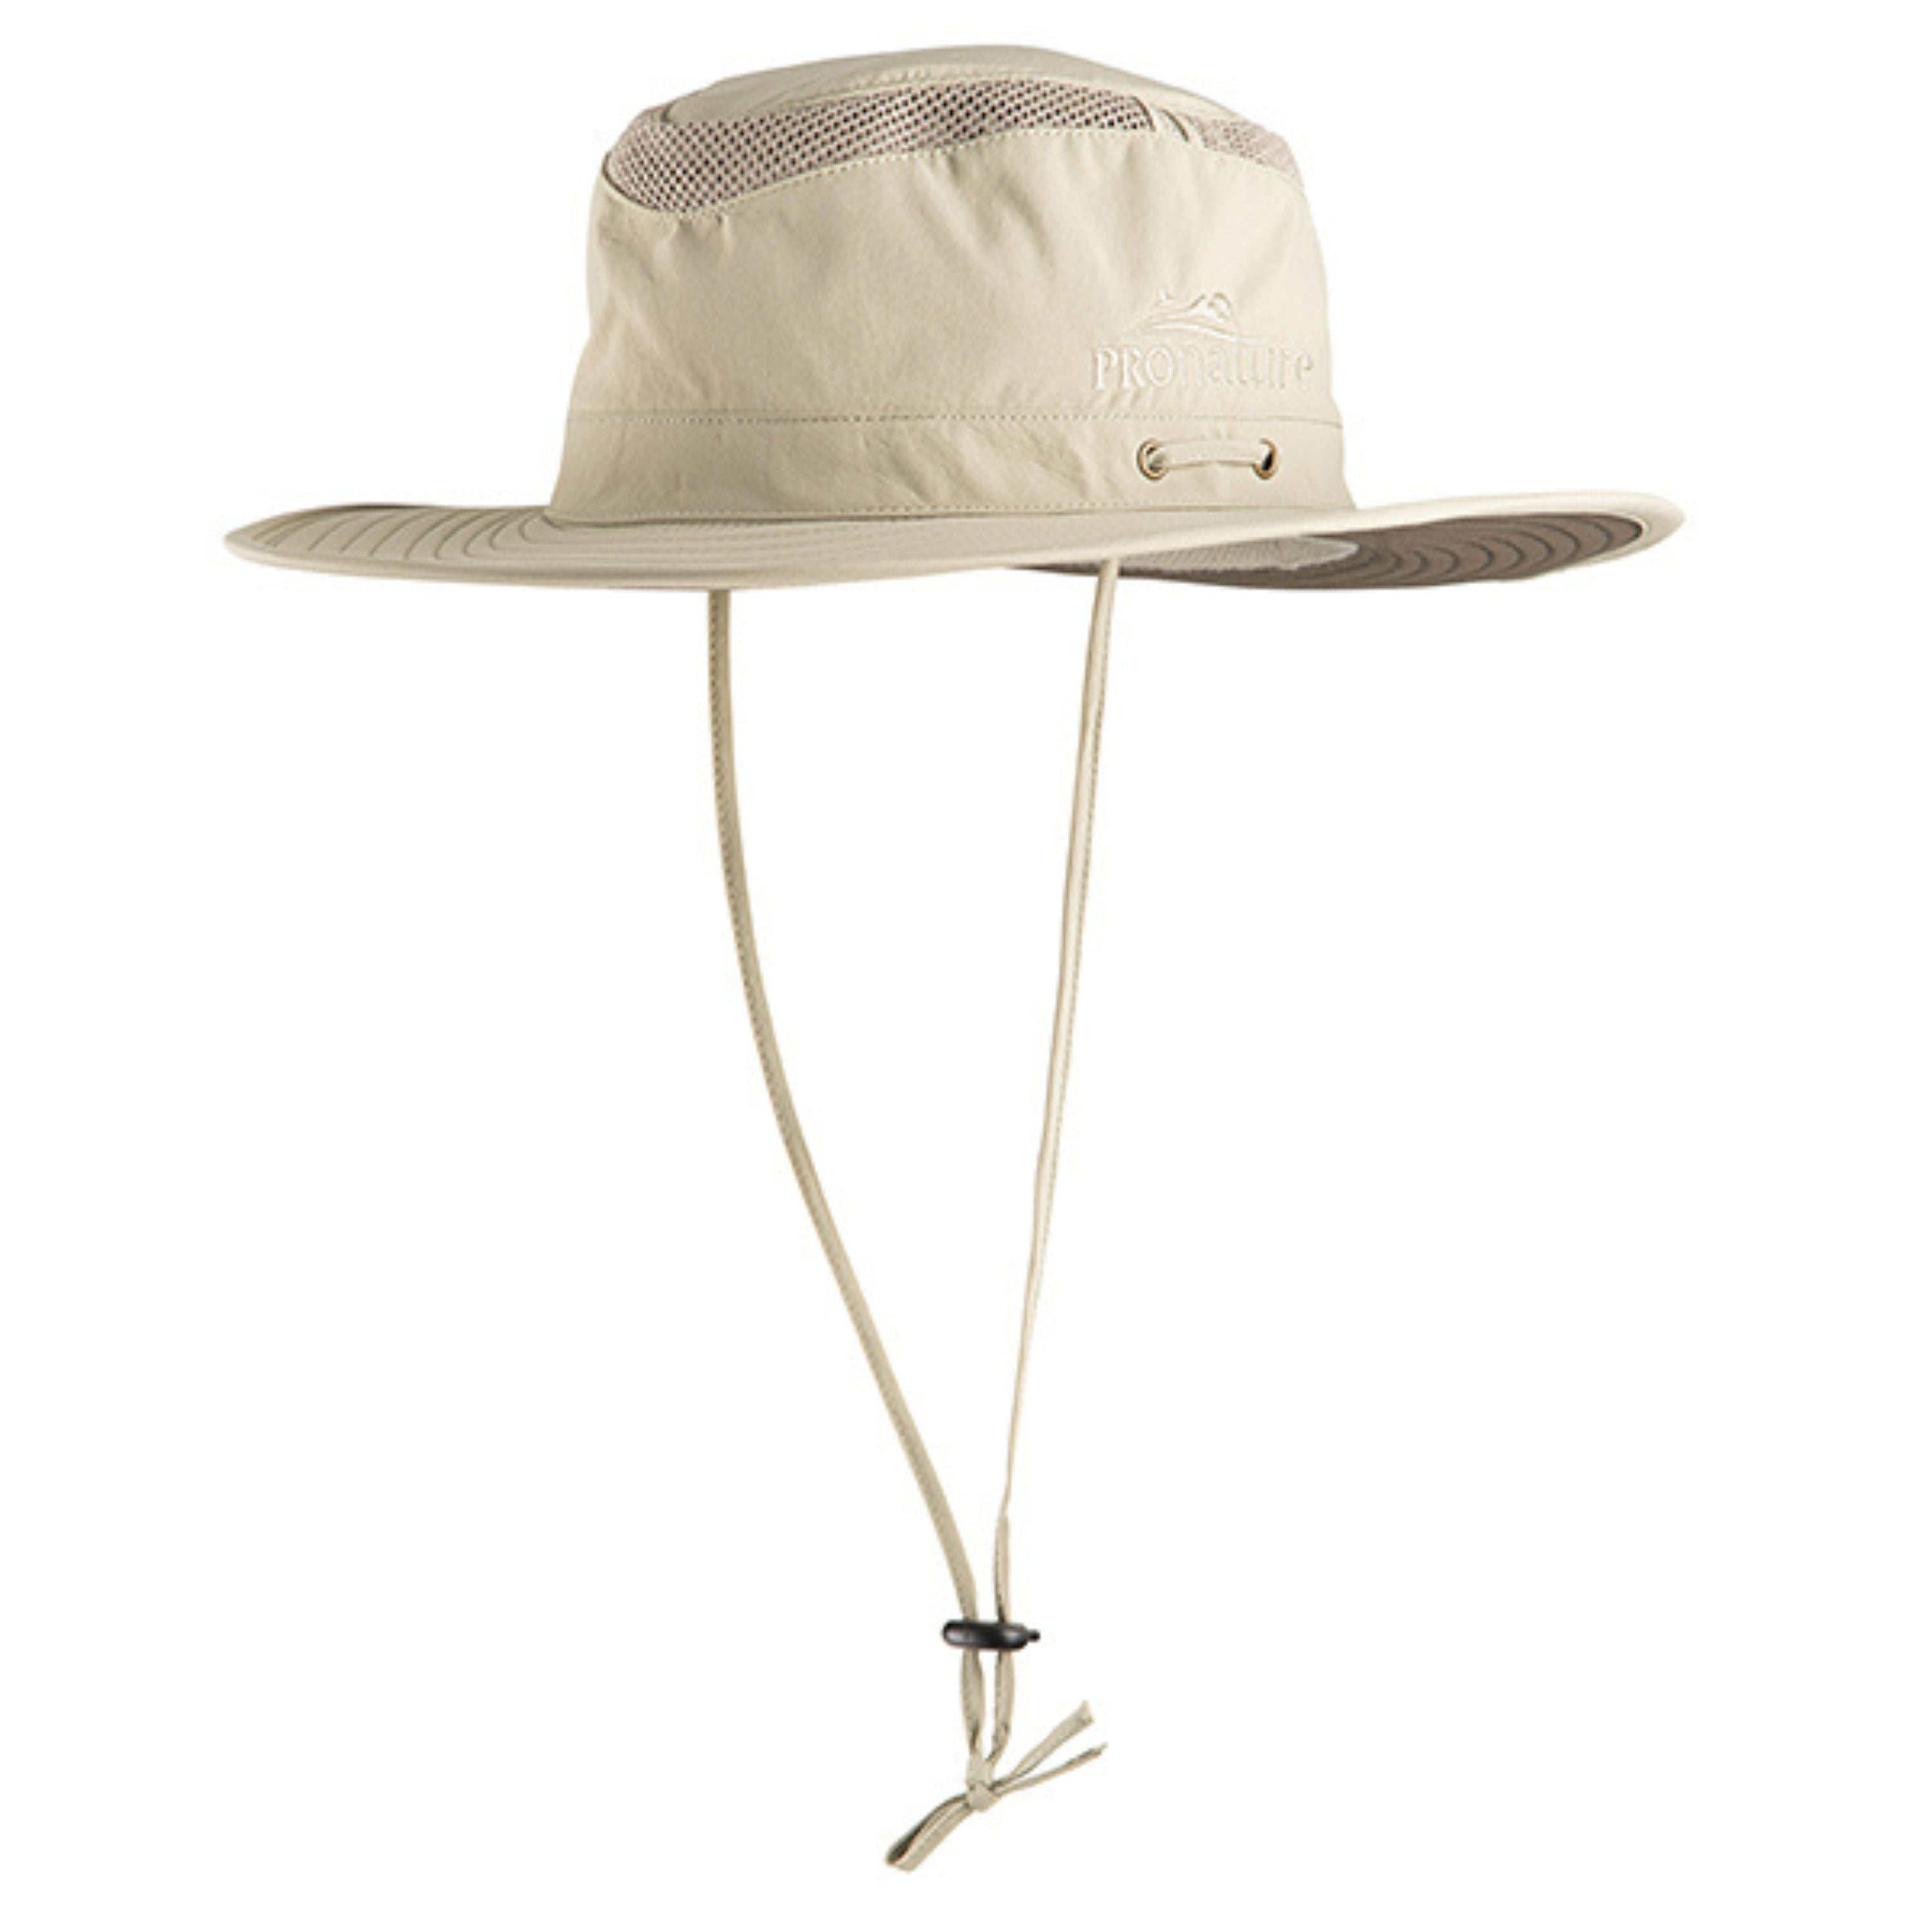 Chapeau de plein air "Montagnard"- Unisexe||"Montagnard" Outdoor hat - Unisex